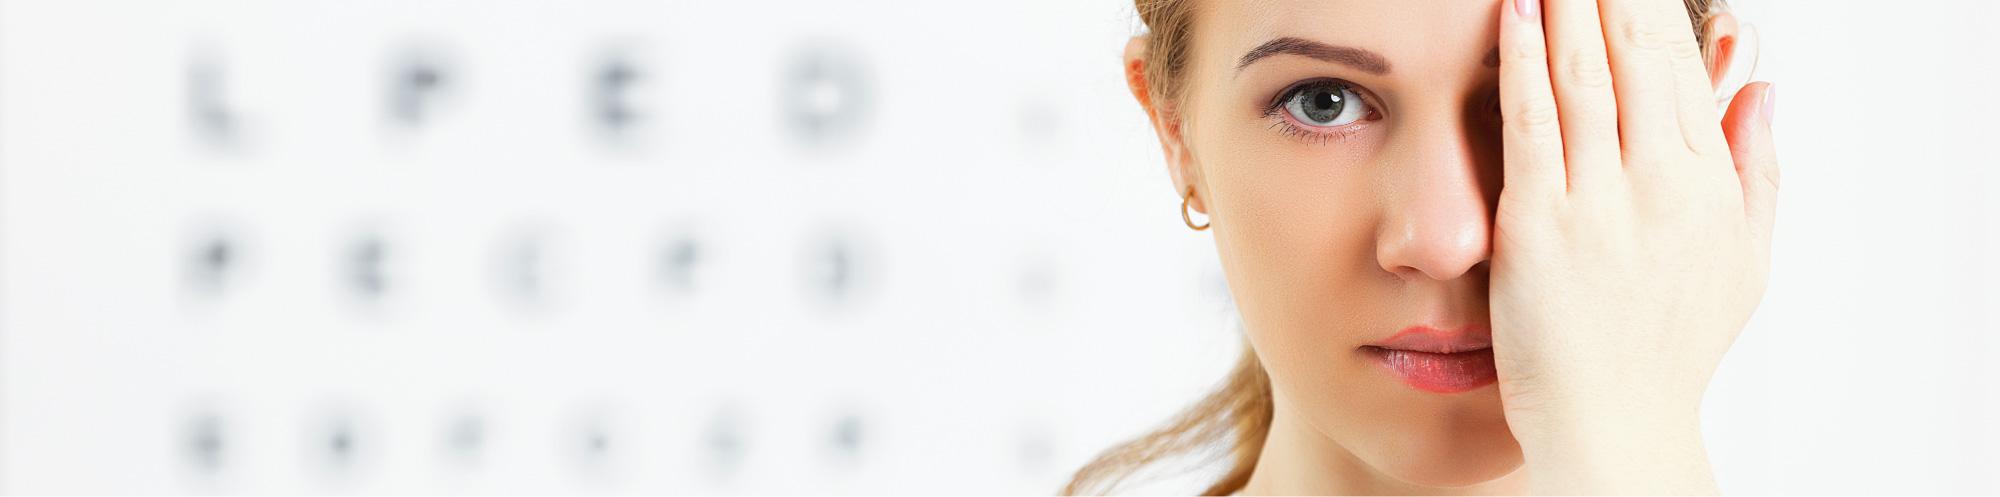 Optische Kohärenz-Tomographie (OCT) - Augenarztpraxis Buchen